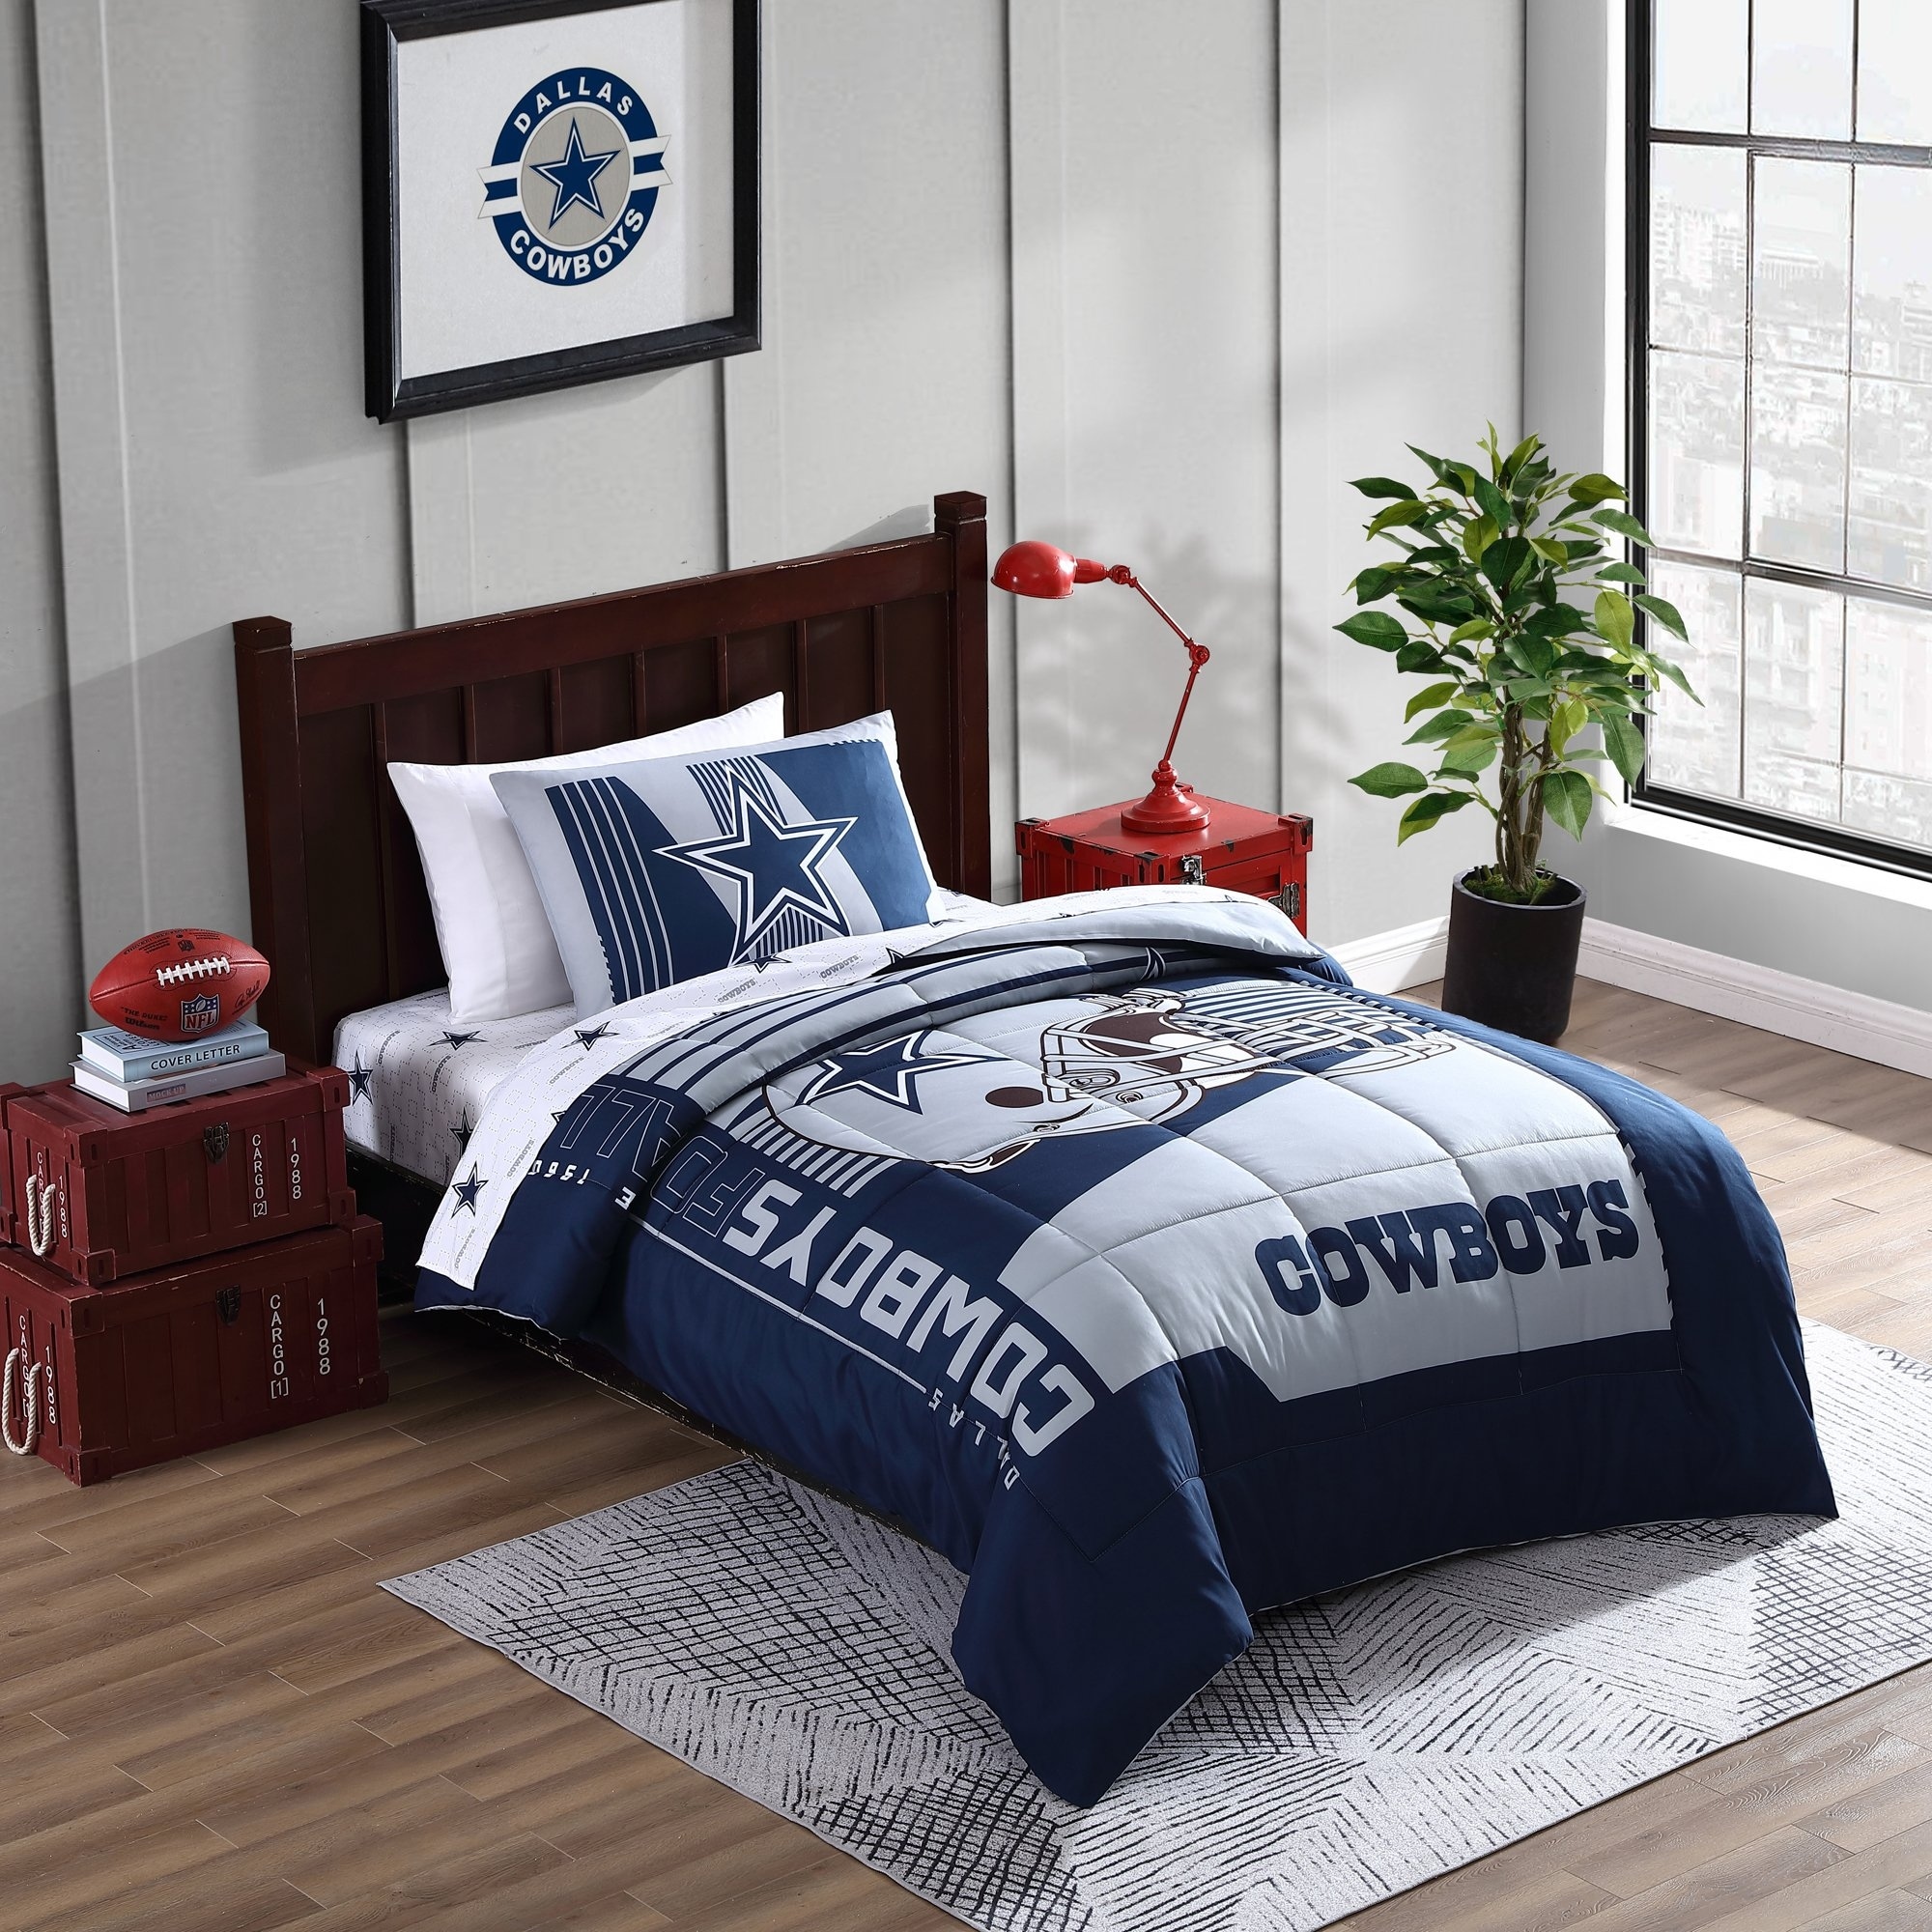 2 Pc TWIN Size Printed Comforter/Sham Set Dallas Cowboys 